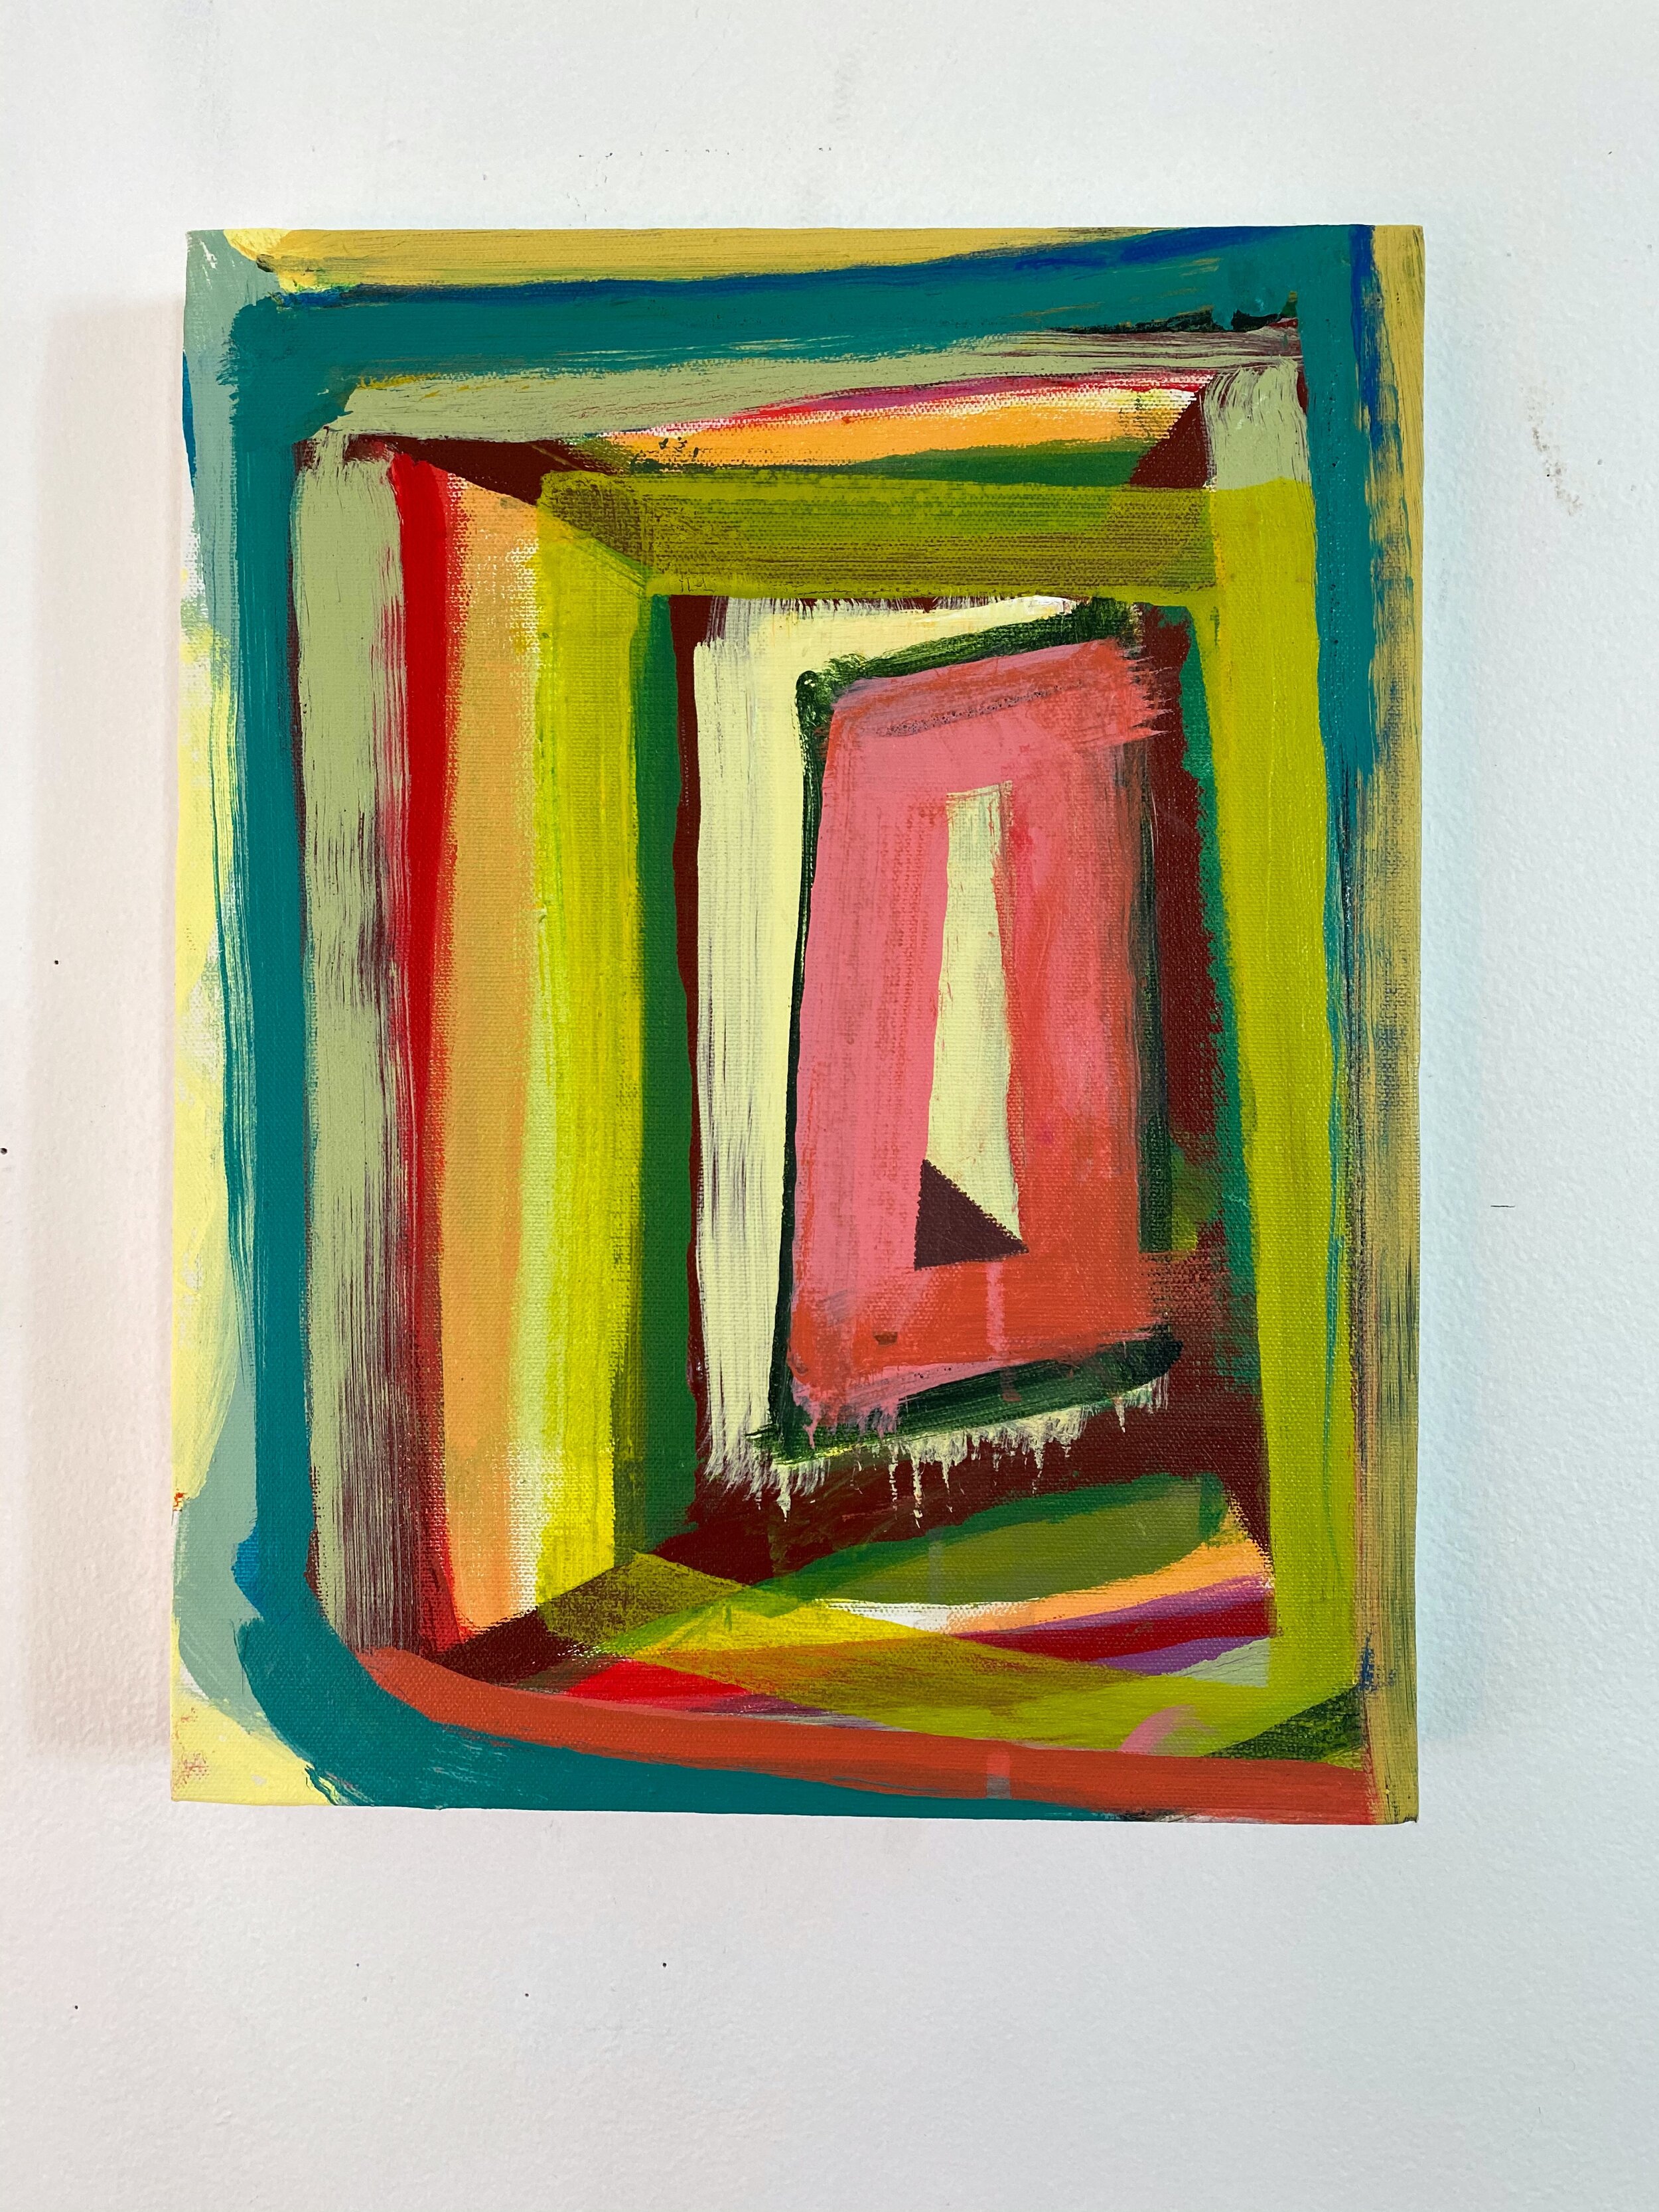 "Sunday Conversation", acrylic on canvas, 14" x 11" (35.56cm x 27.94cm)